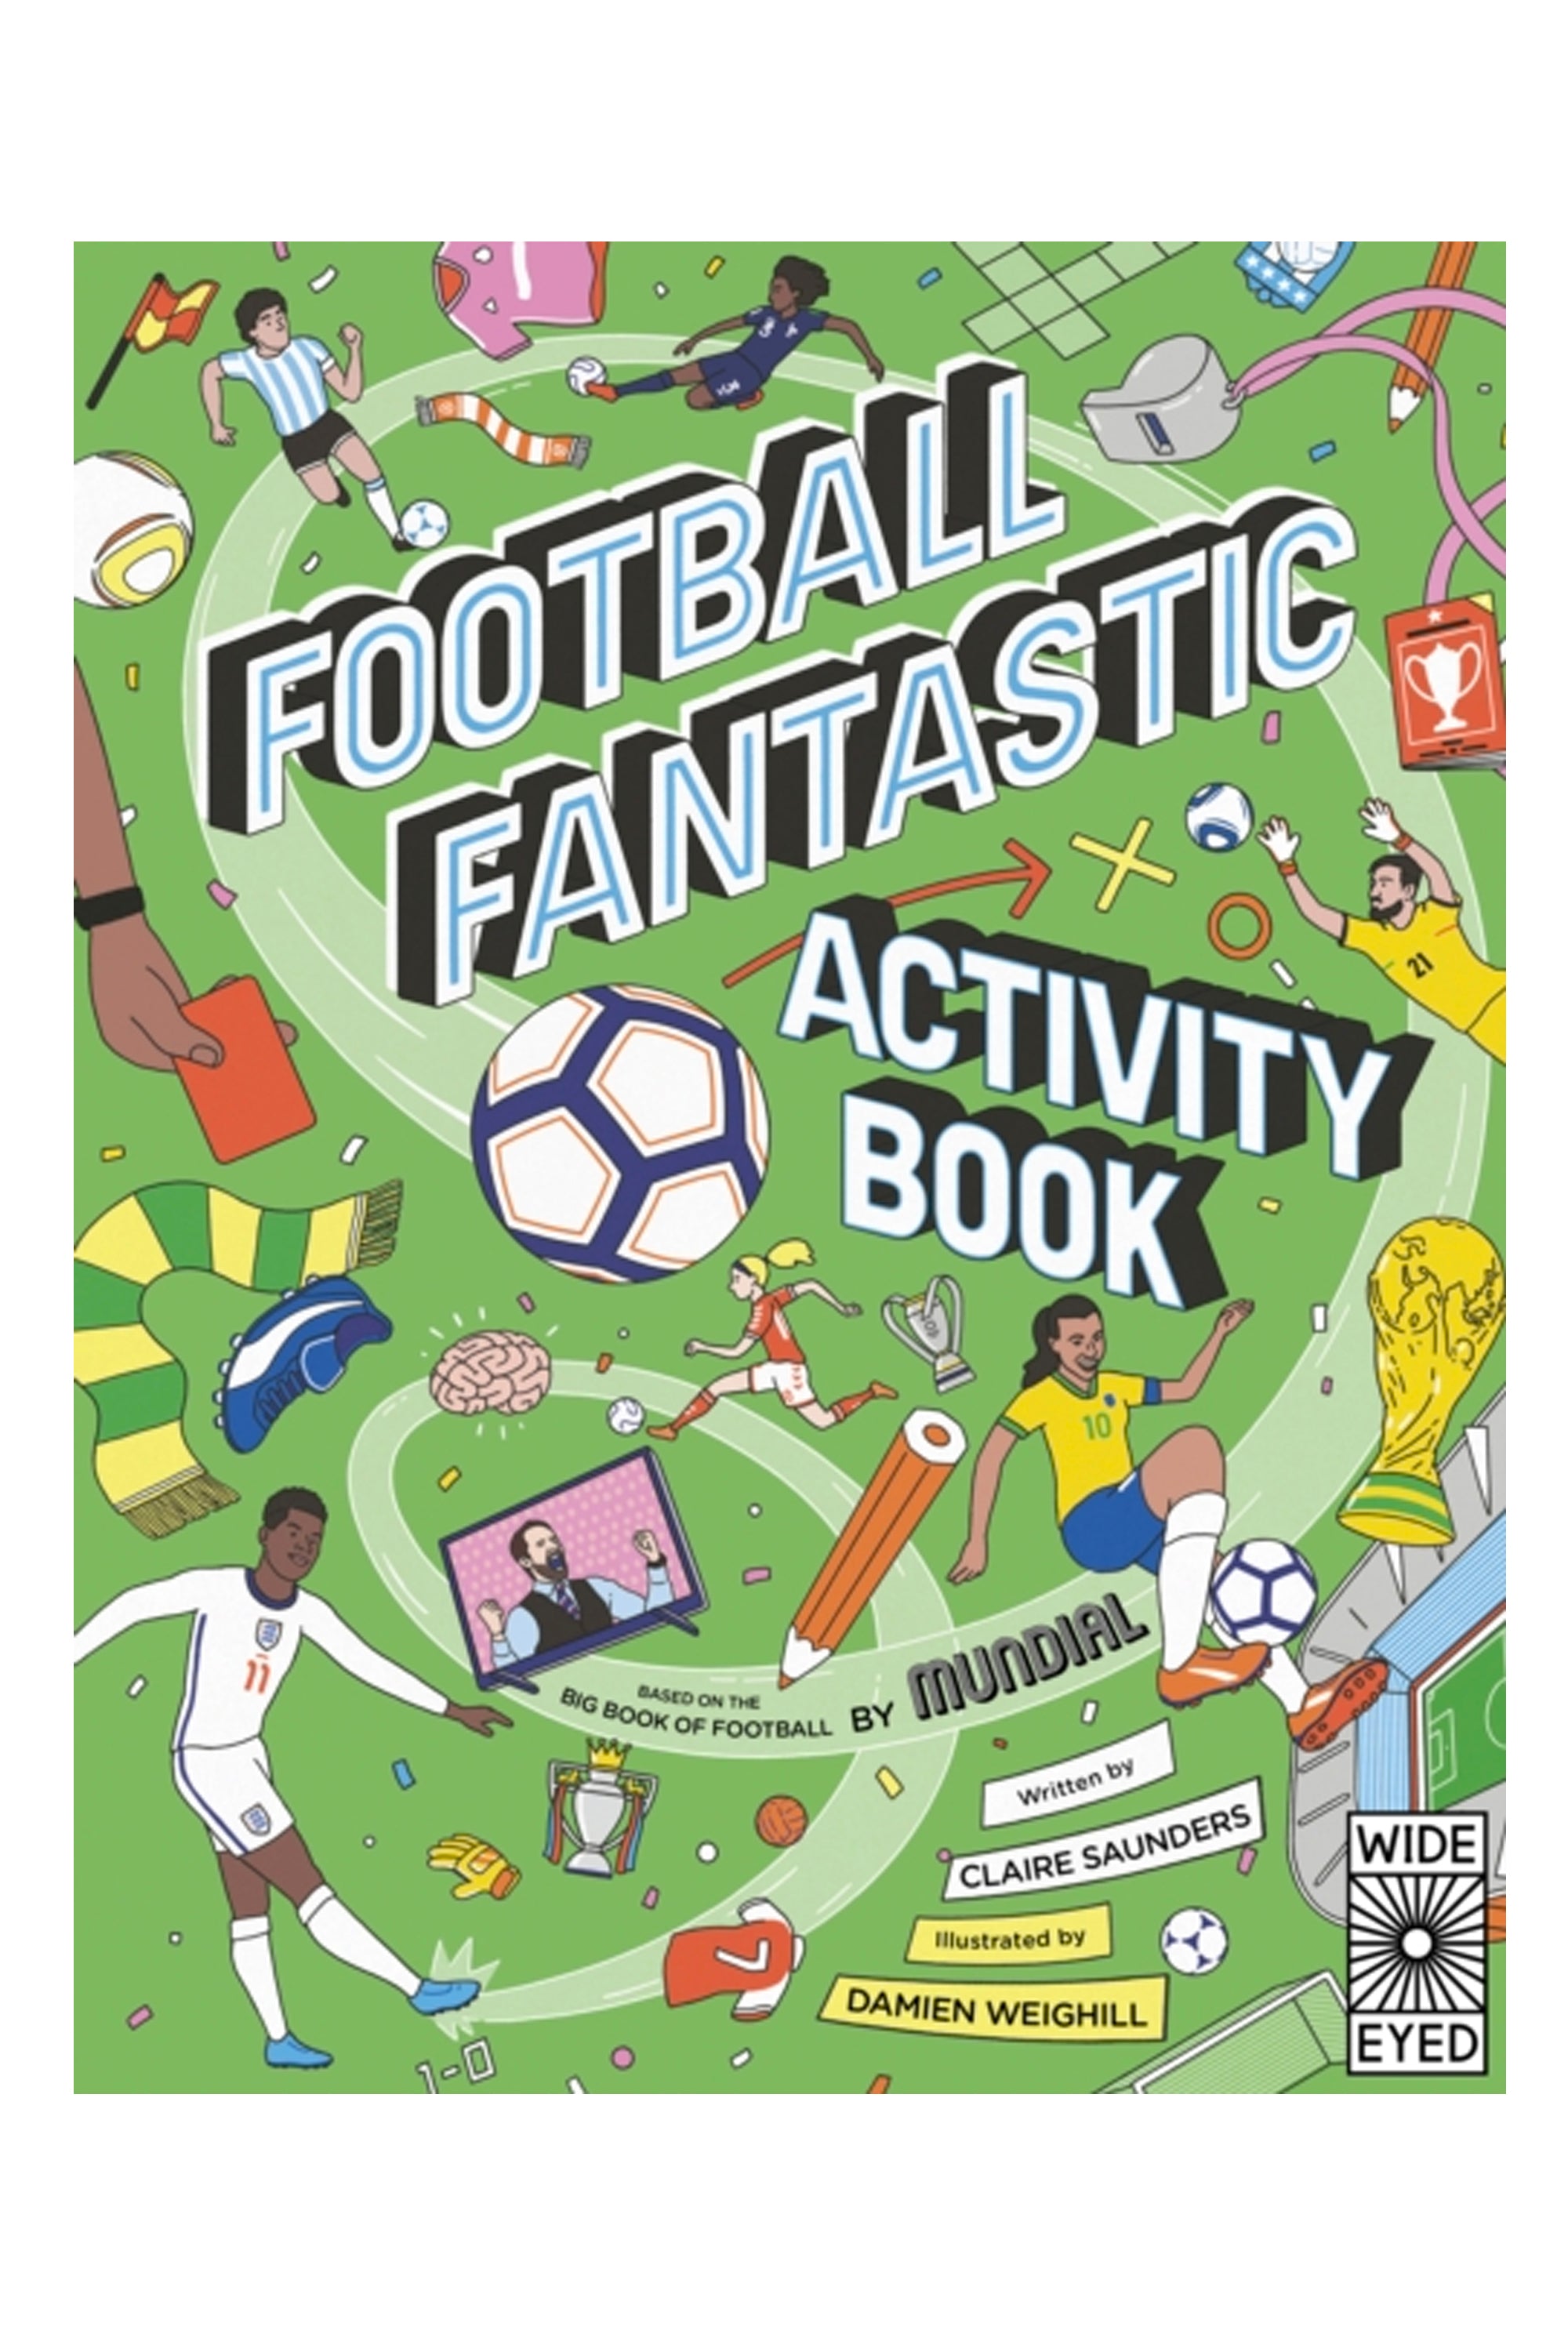 Football Fantastic Activity Book.